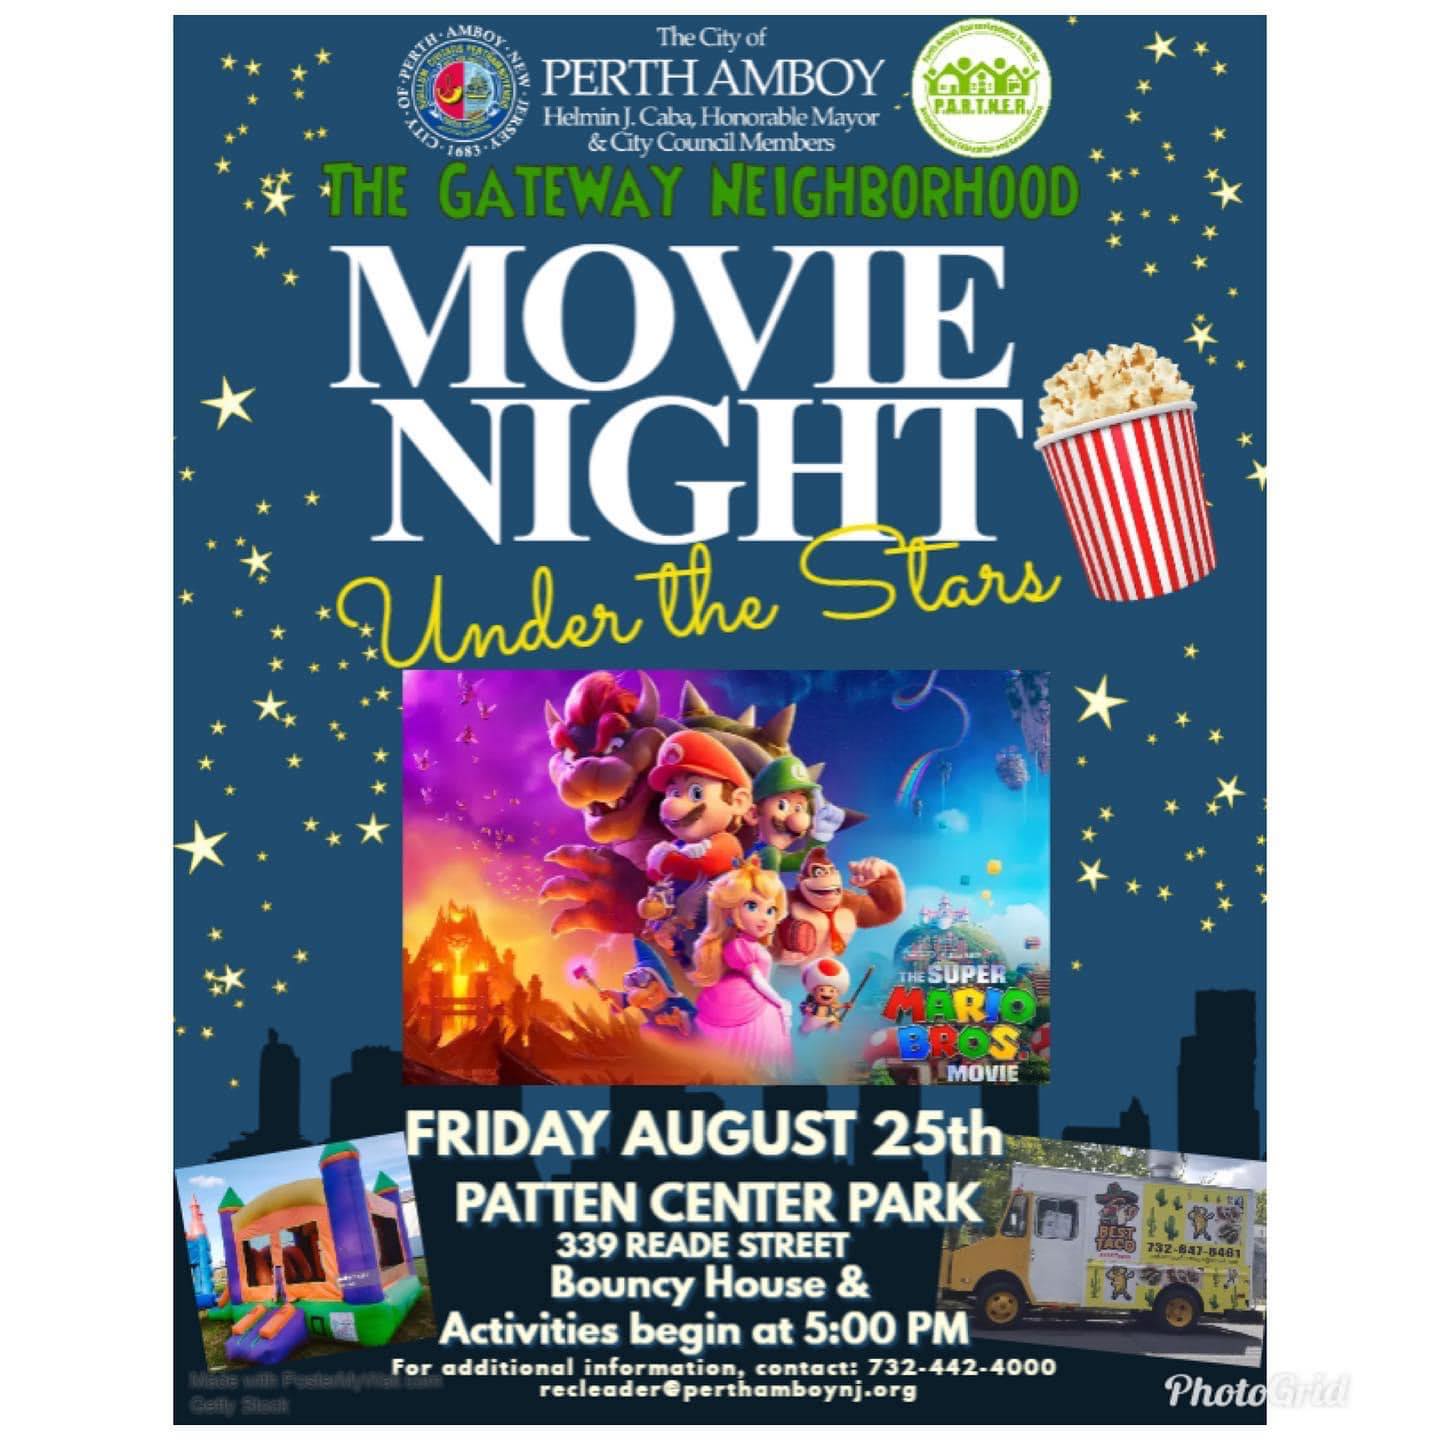 Perth Amboy Movie Night Under the Stars